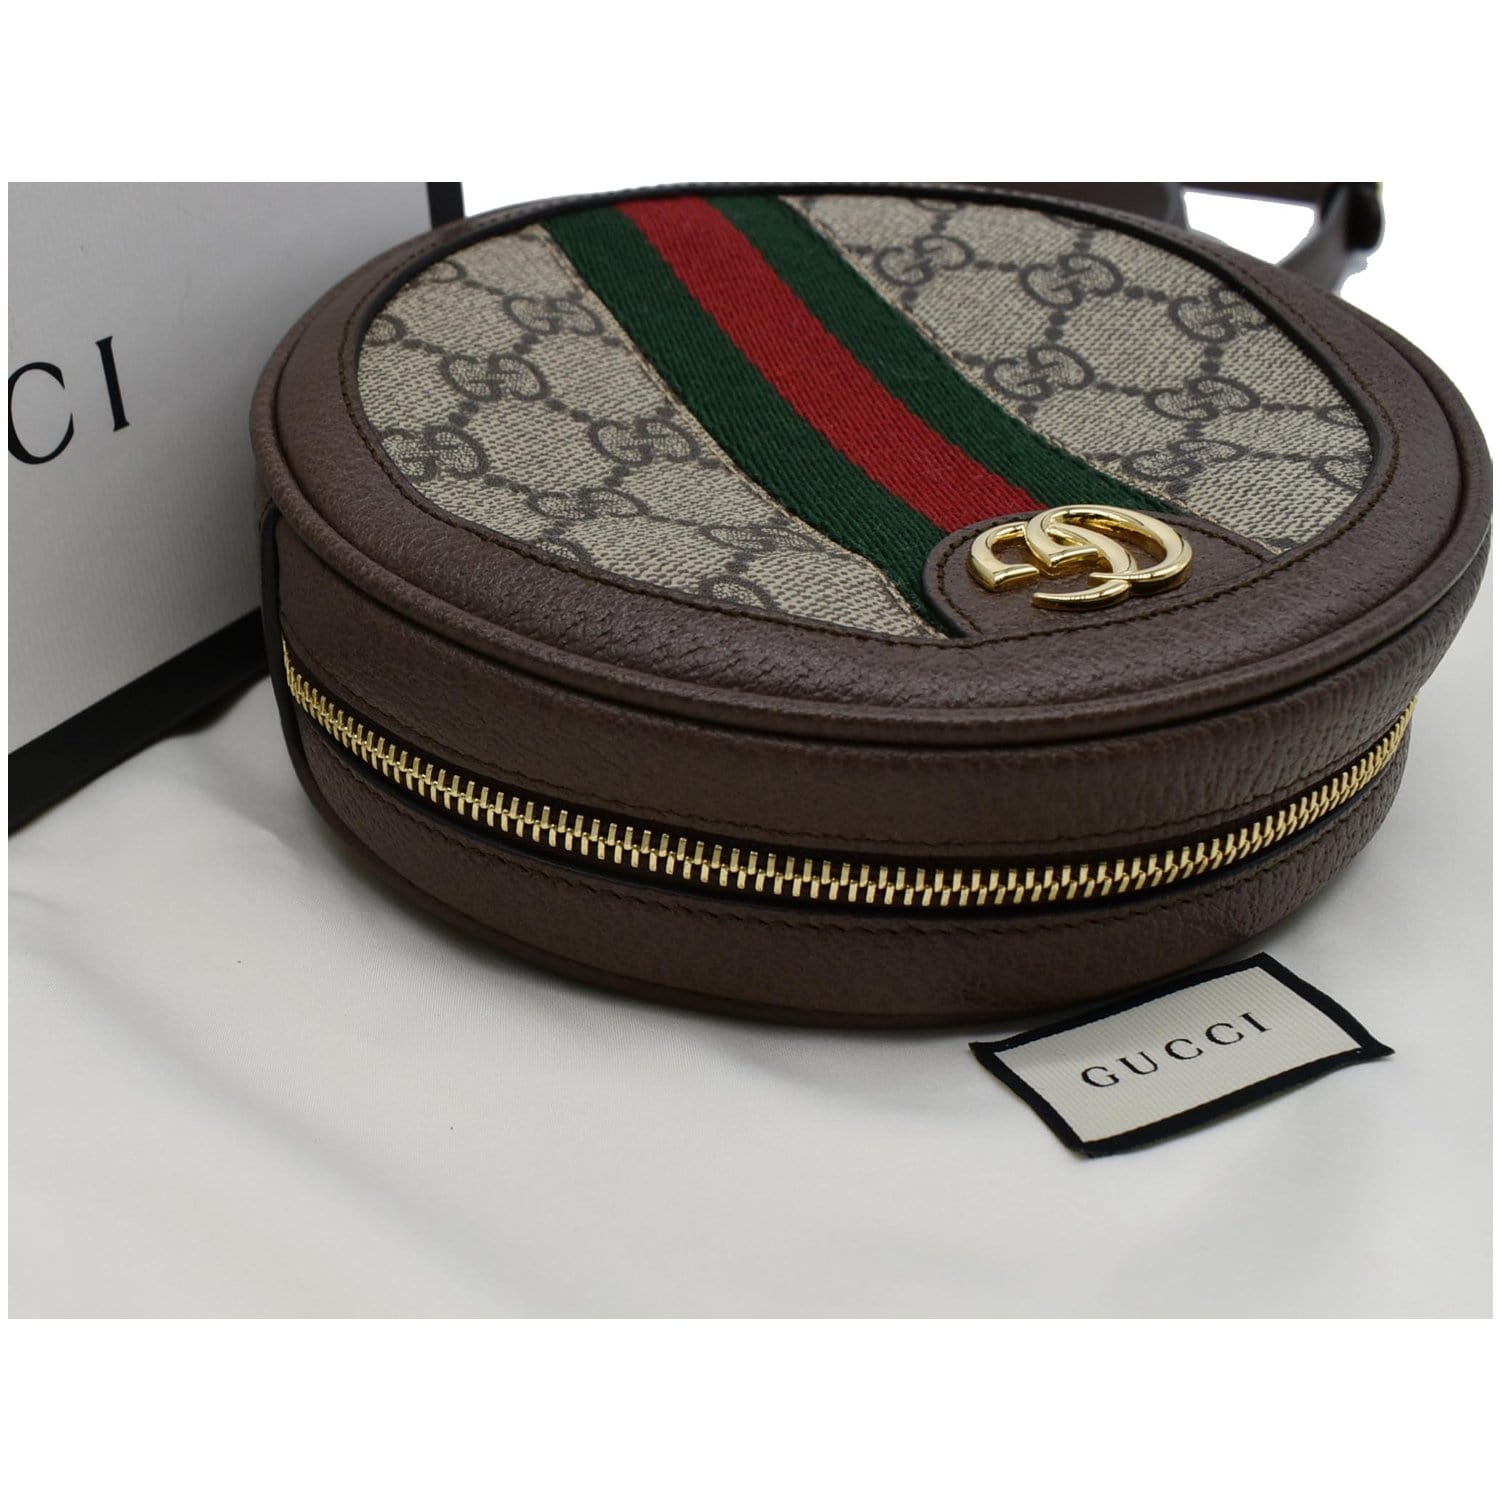 Gucci Ophidia GG Mini Bag - Farfetch